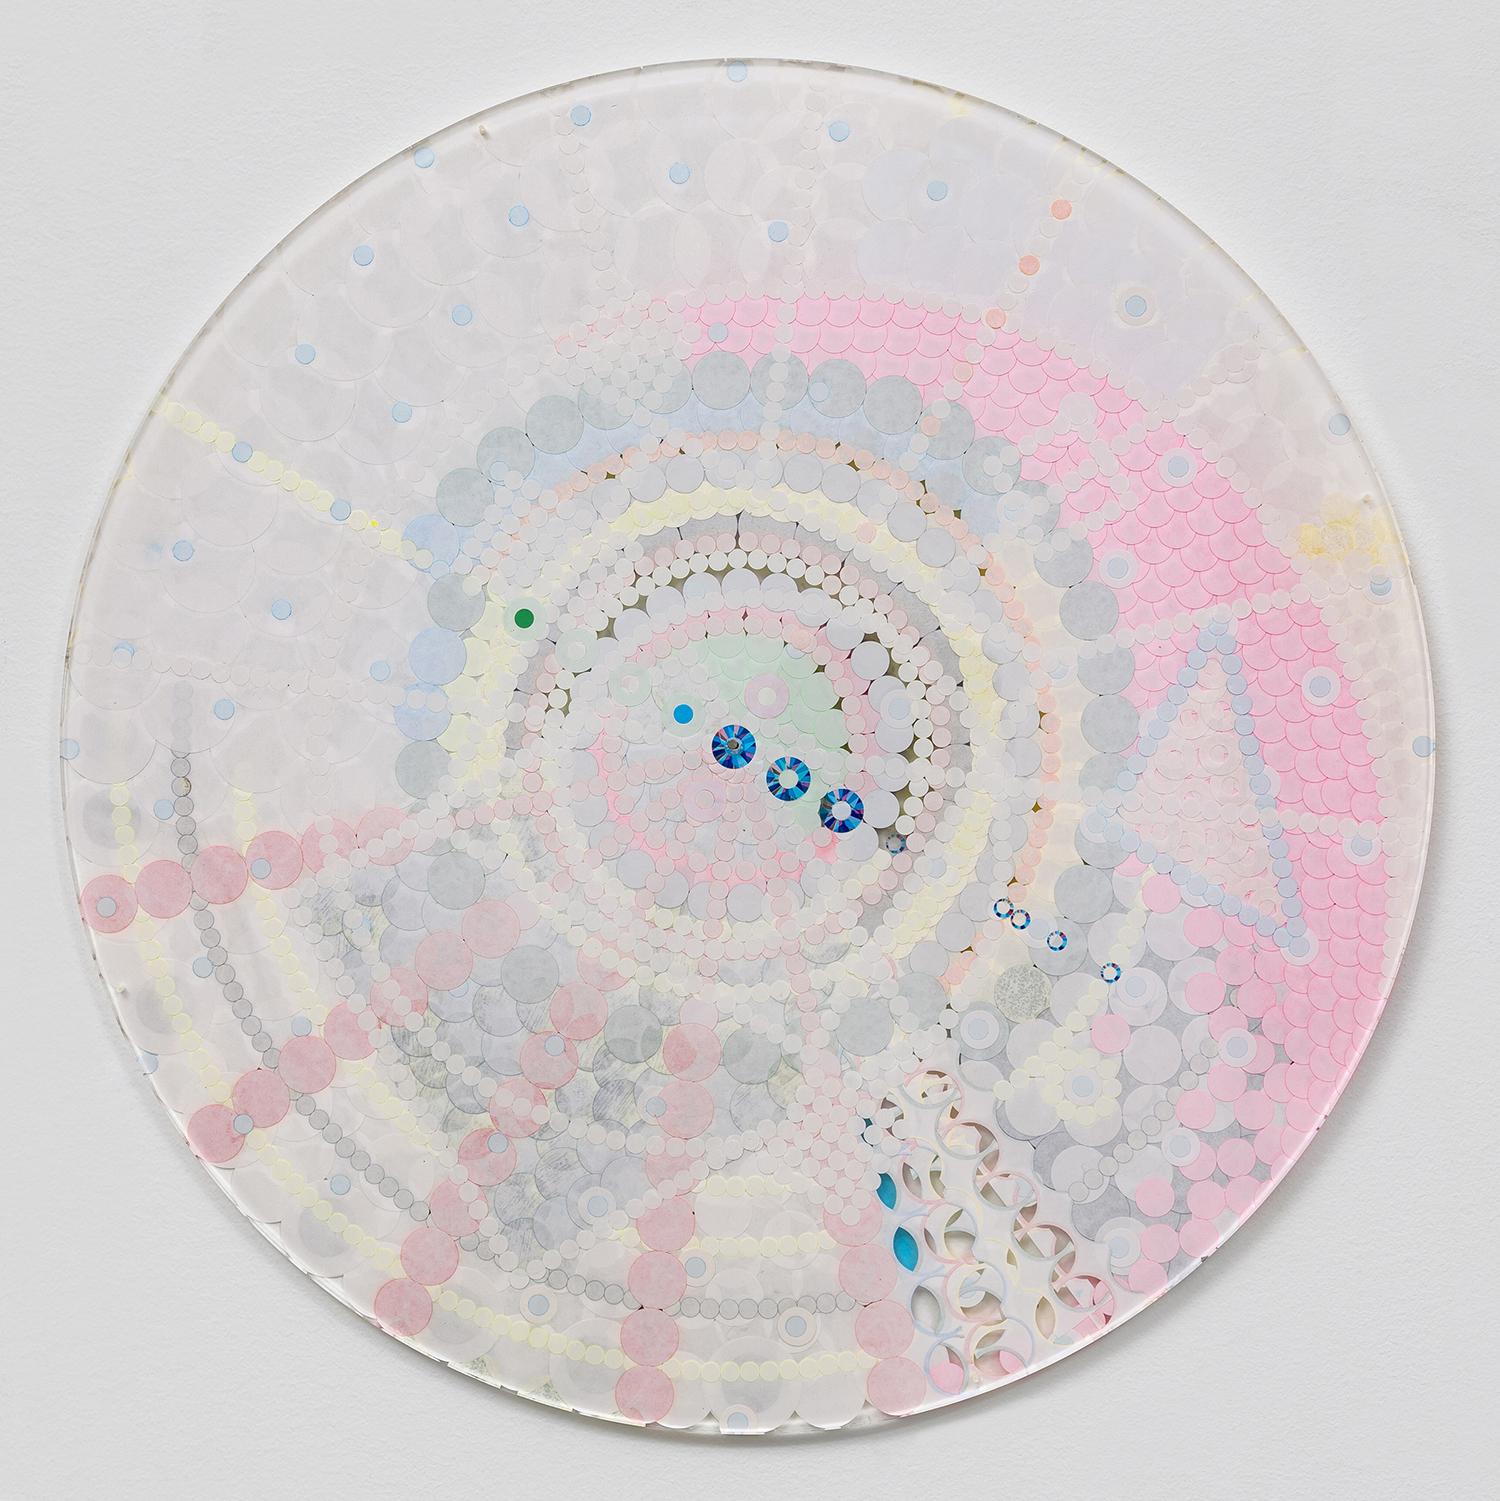 Fusion Mandala n°4, circular meditative contemporary abstract in white and pink - Mixed Media Art by Pauline Galiana